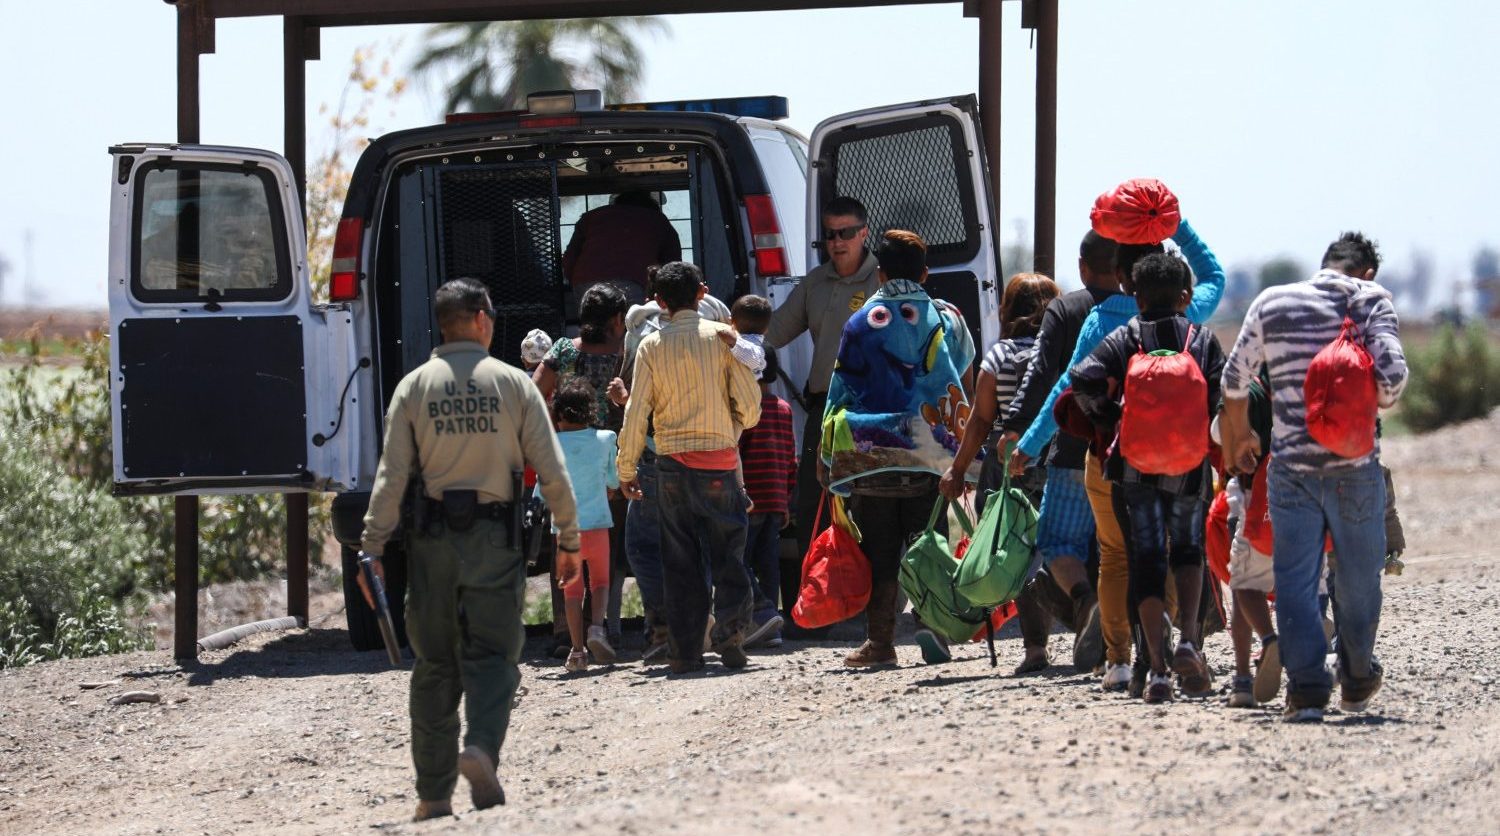 $1.2 Million in Supplies for Illegal Immigrants: Yuma Border Patrol